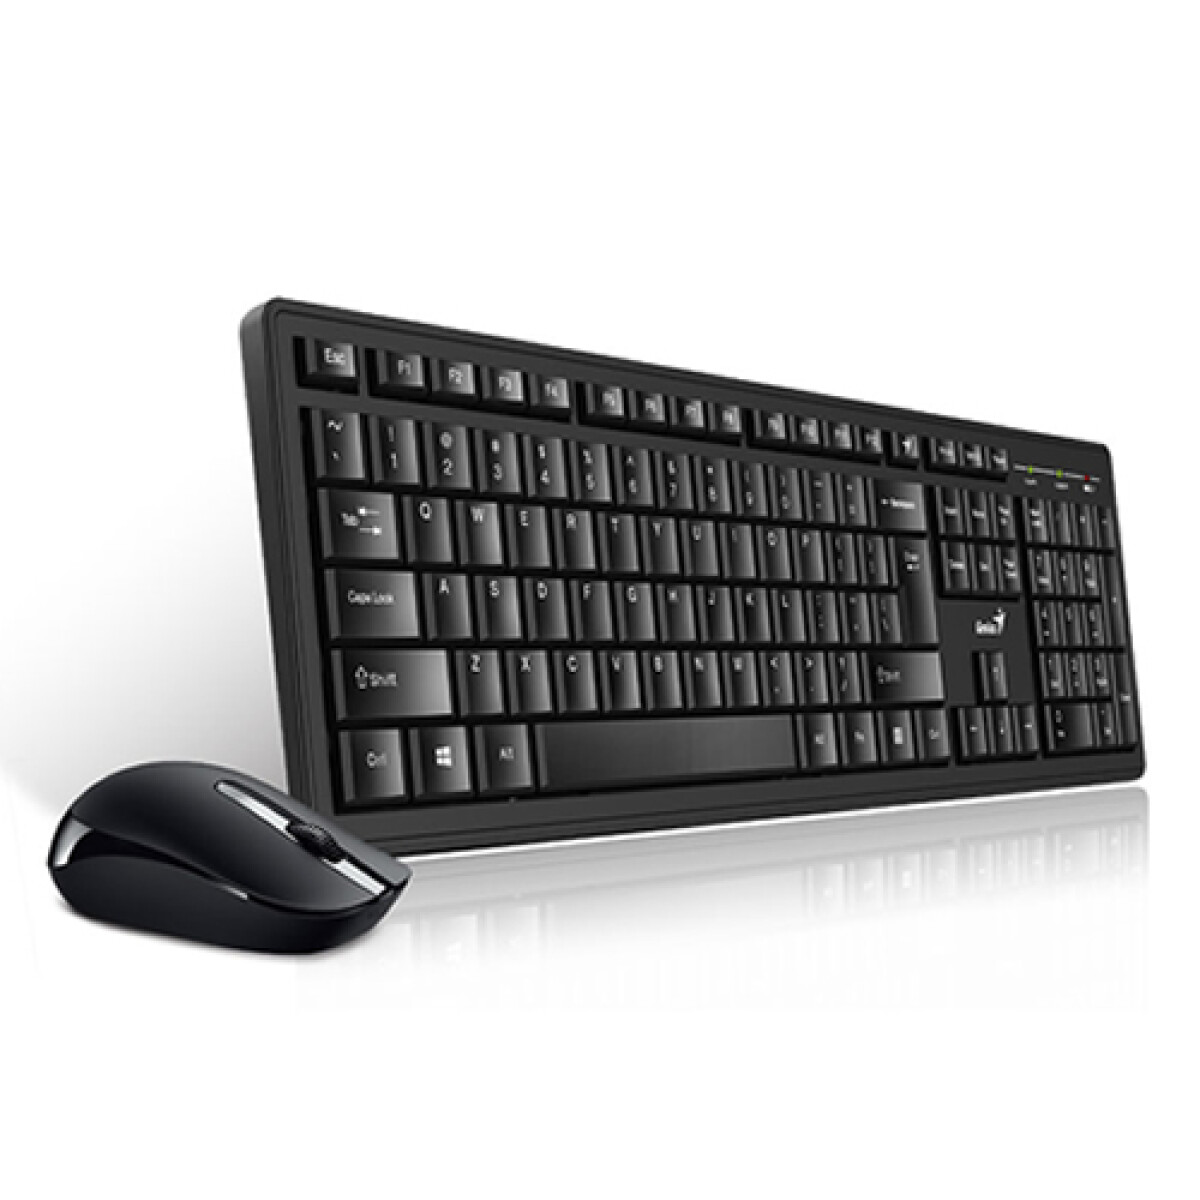 Kit mouse y teclado Genius KM-8200 español 